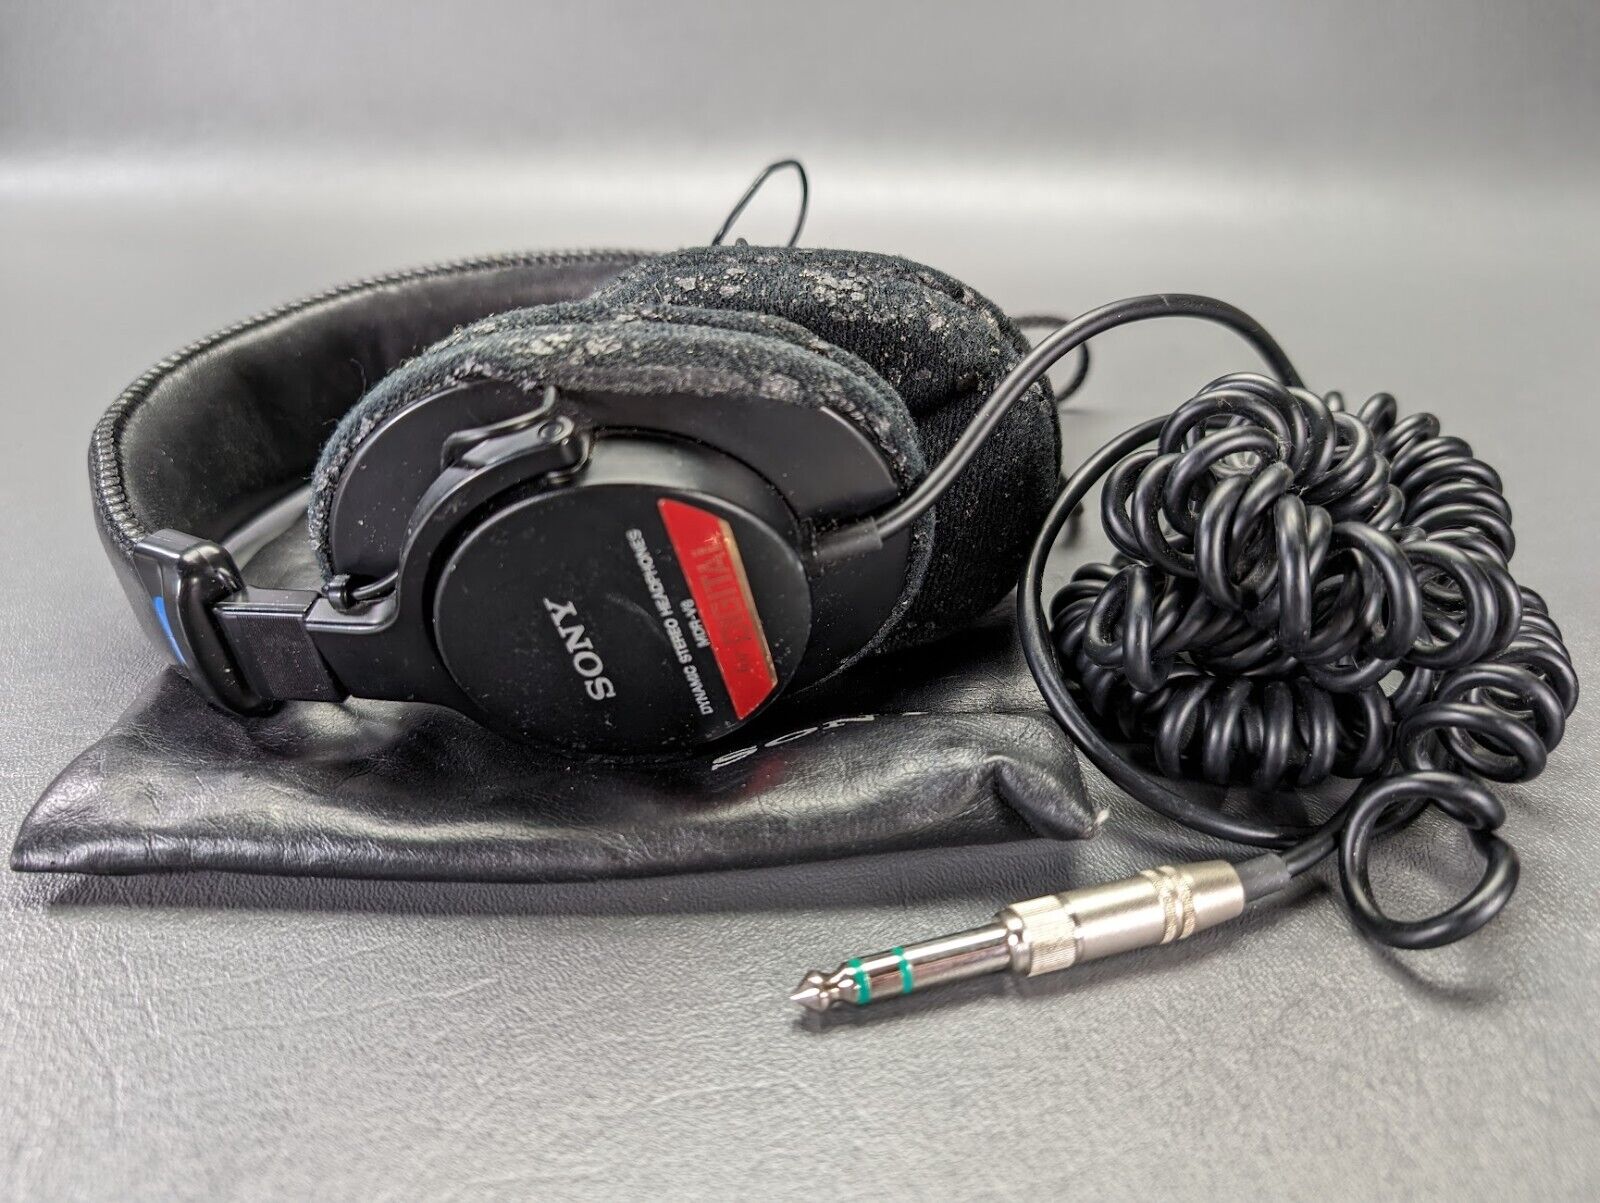 Sony MDR-V6 Studio Monitor Dynamic Stereo Headphones